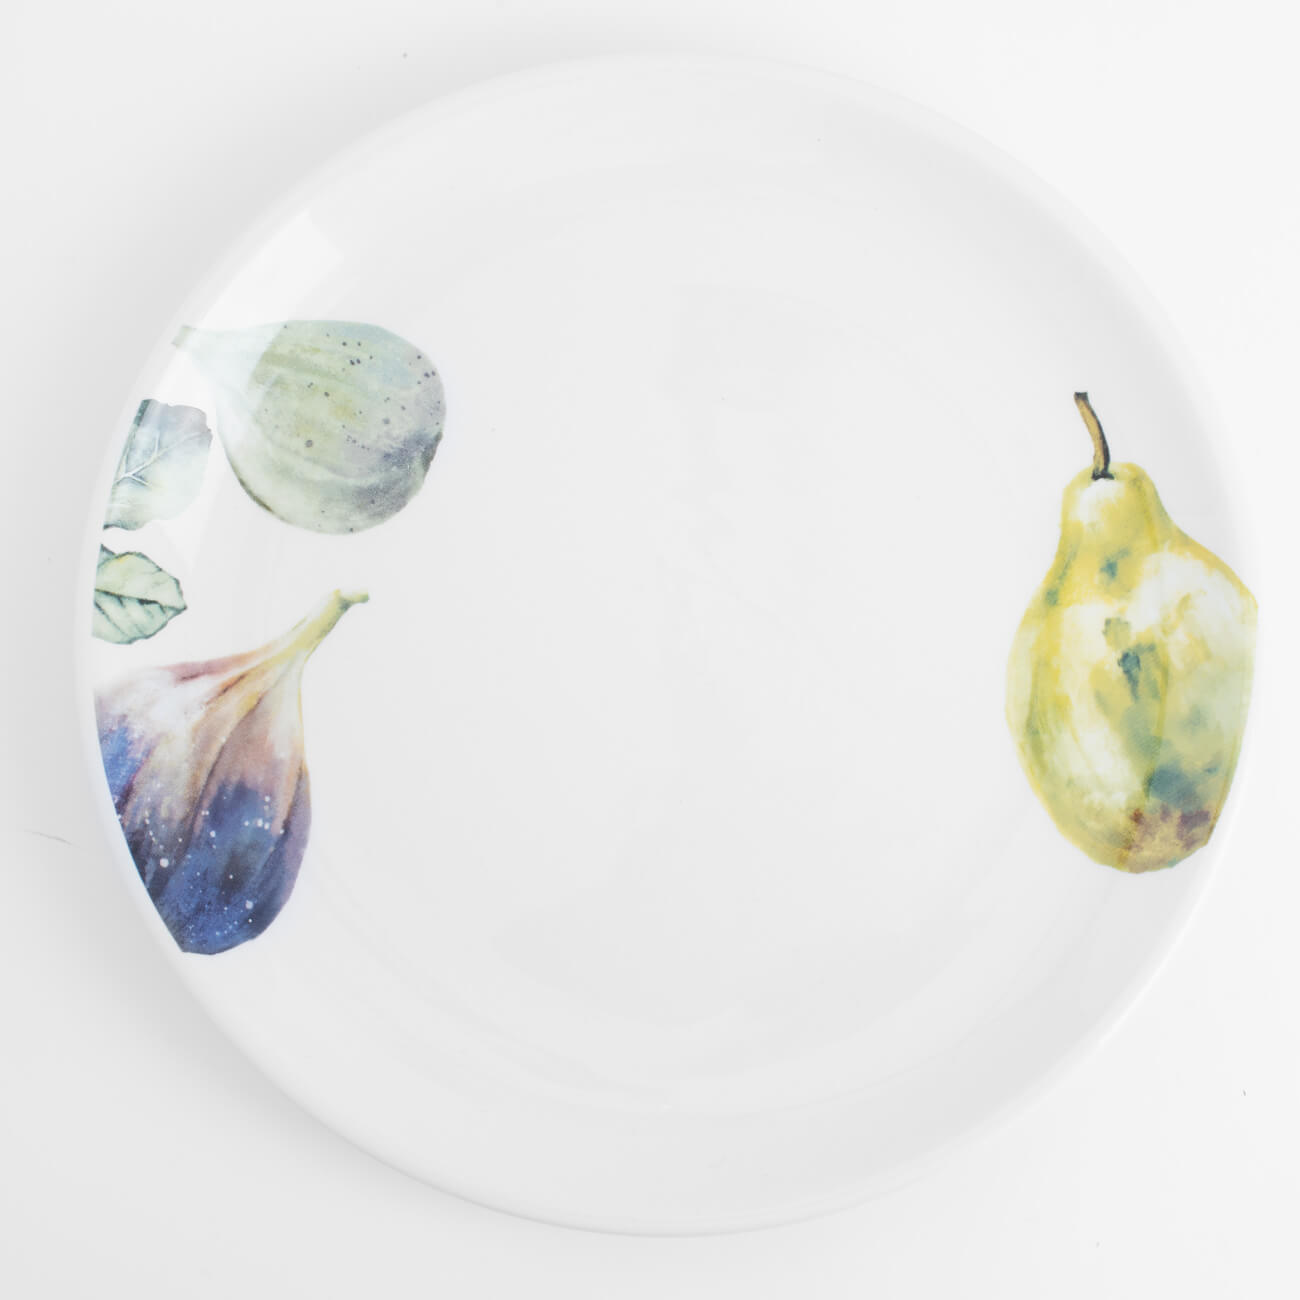 Тарелка закусочная, 21 см, керамика, белая, Инжир и груша, Fruit garden тарелка закусочная maxwell